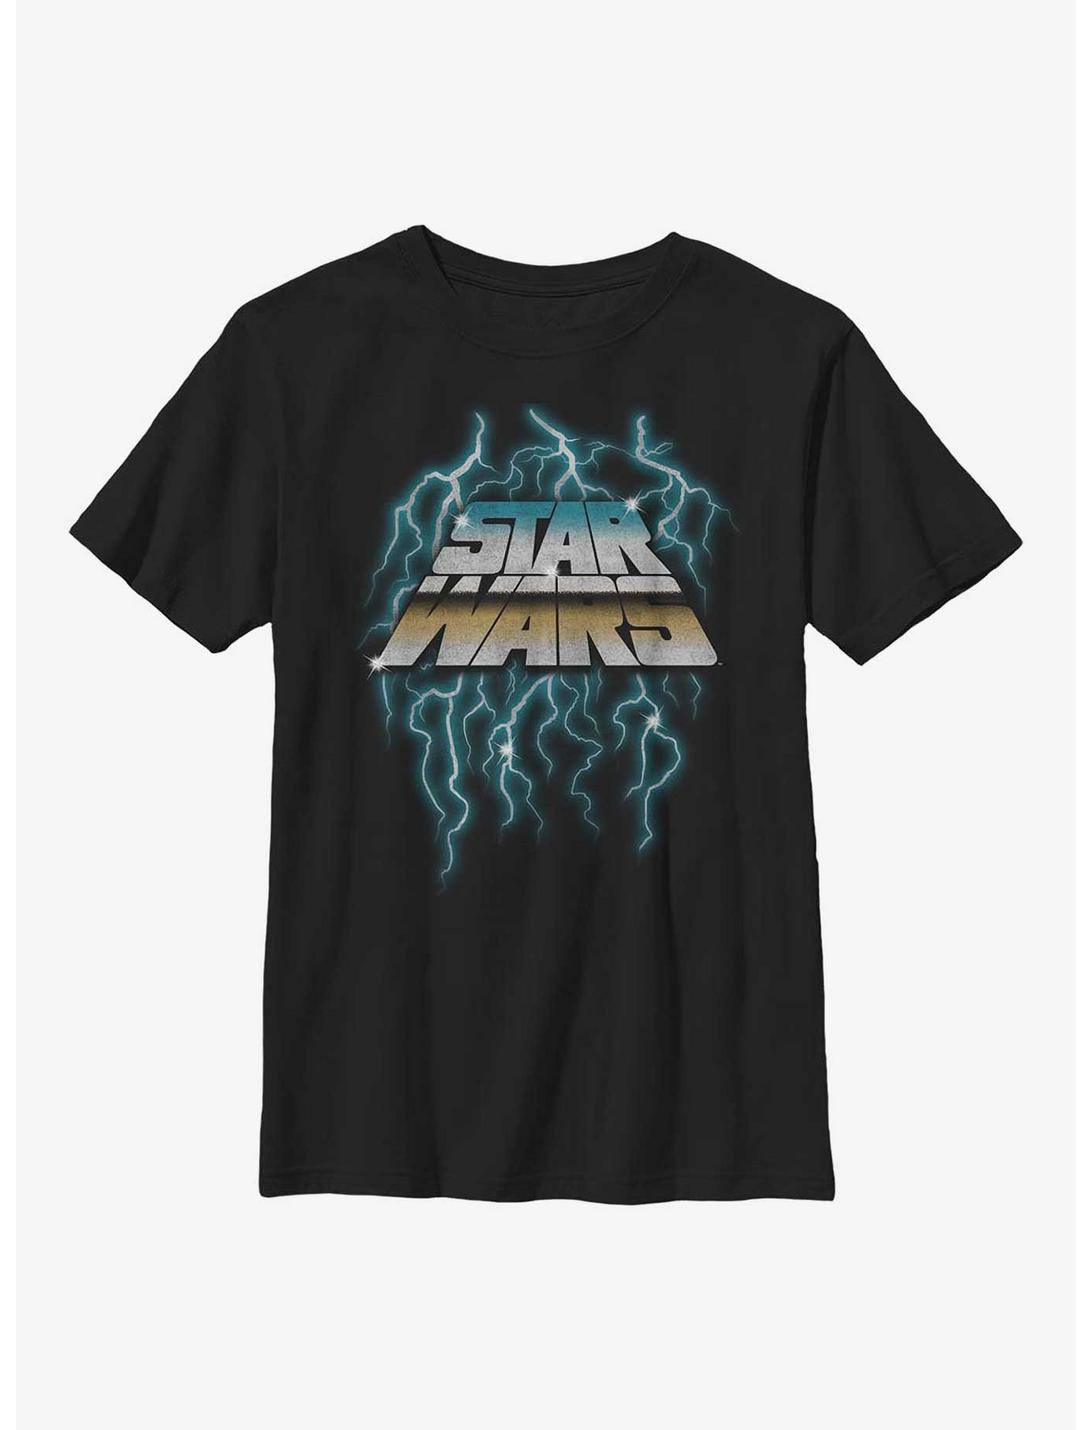 Star Wars Lightning Galaxy Youth T-Shirt, BLACK, hi-res